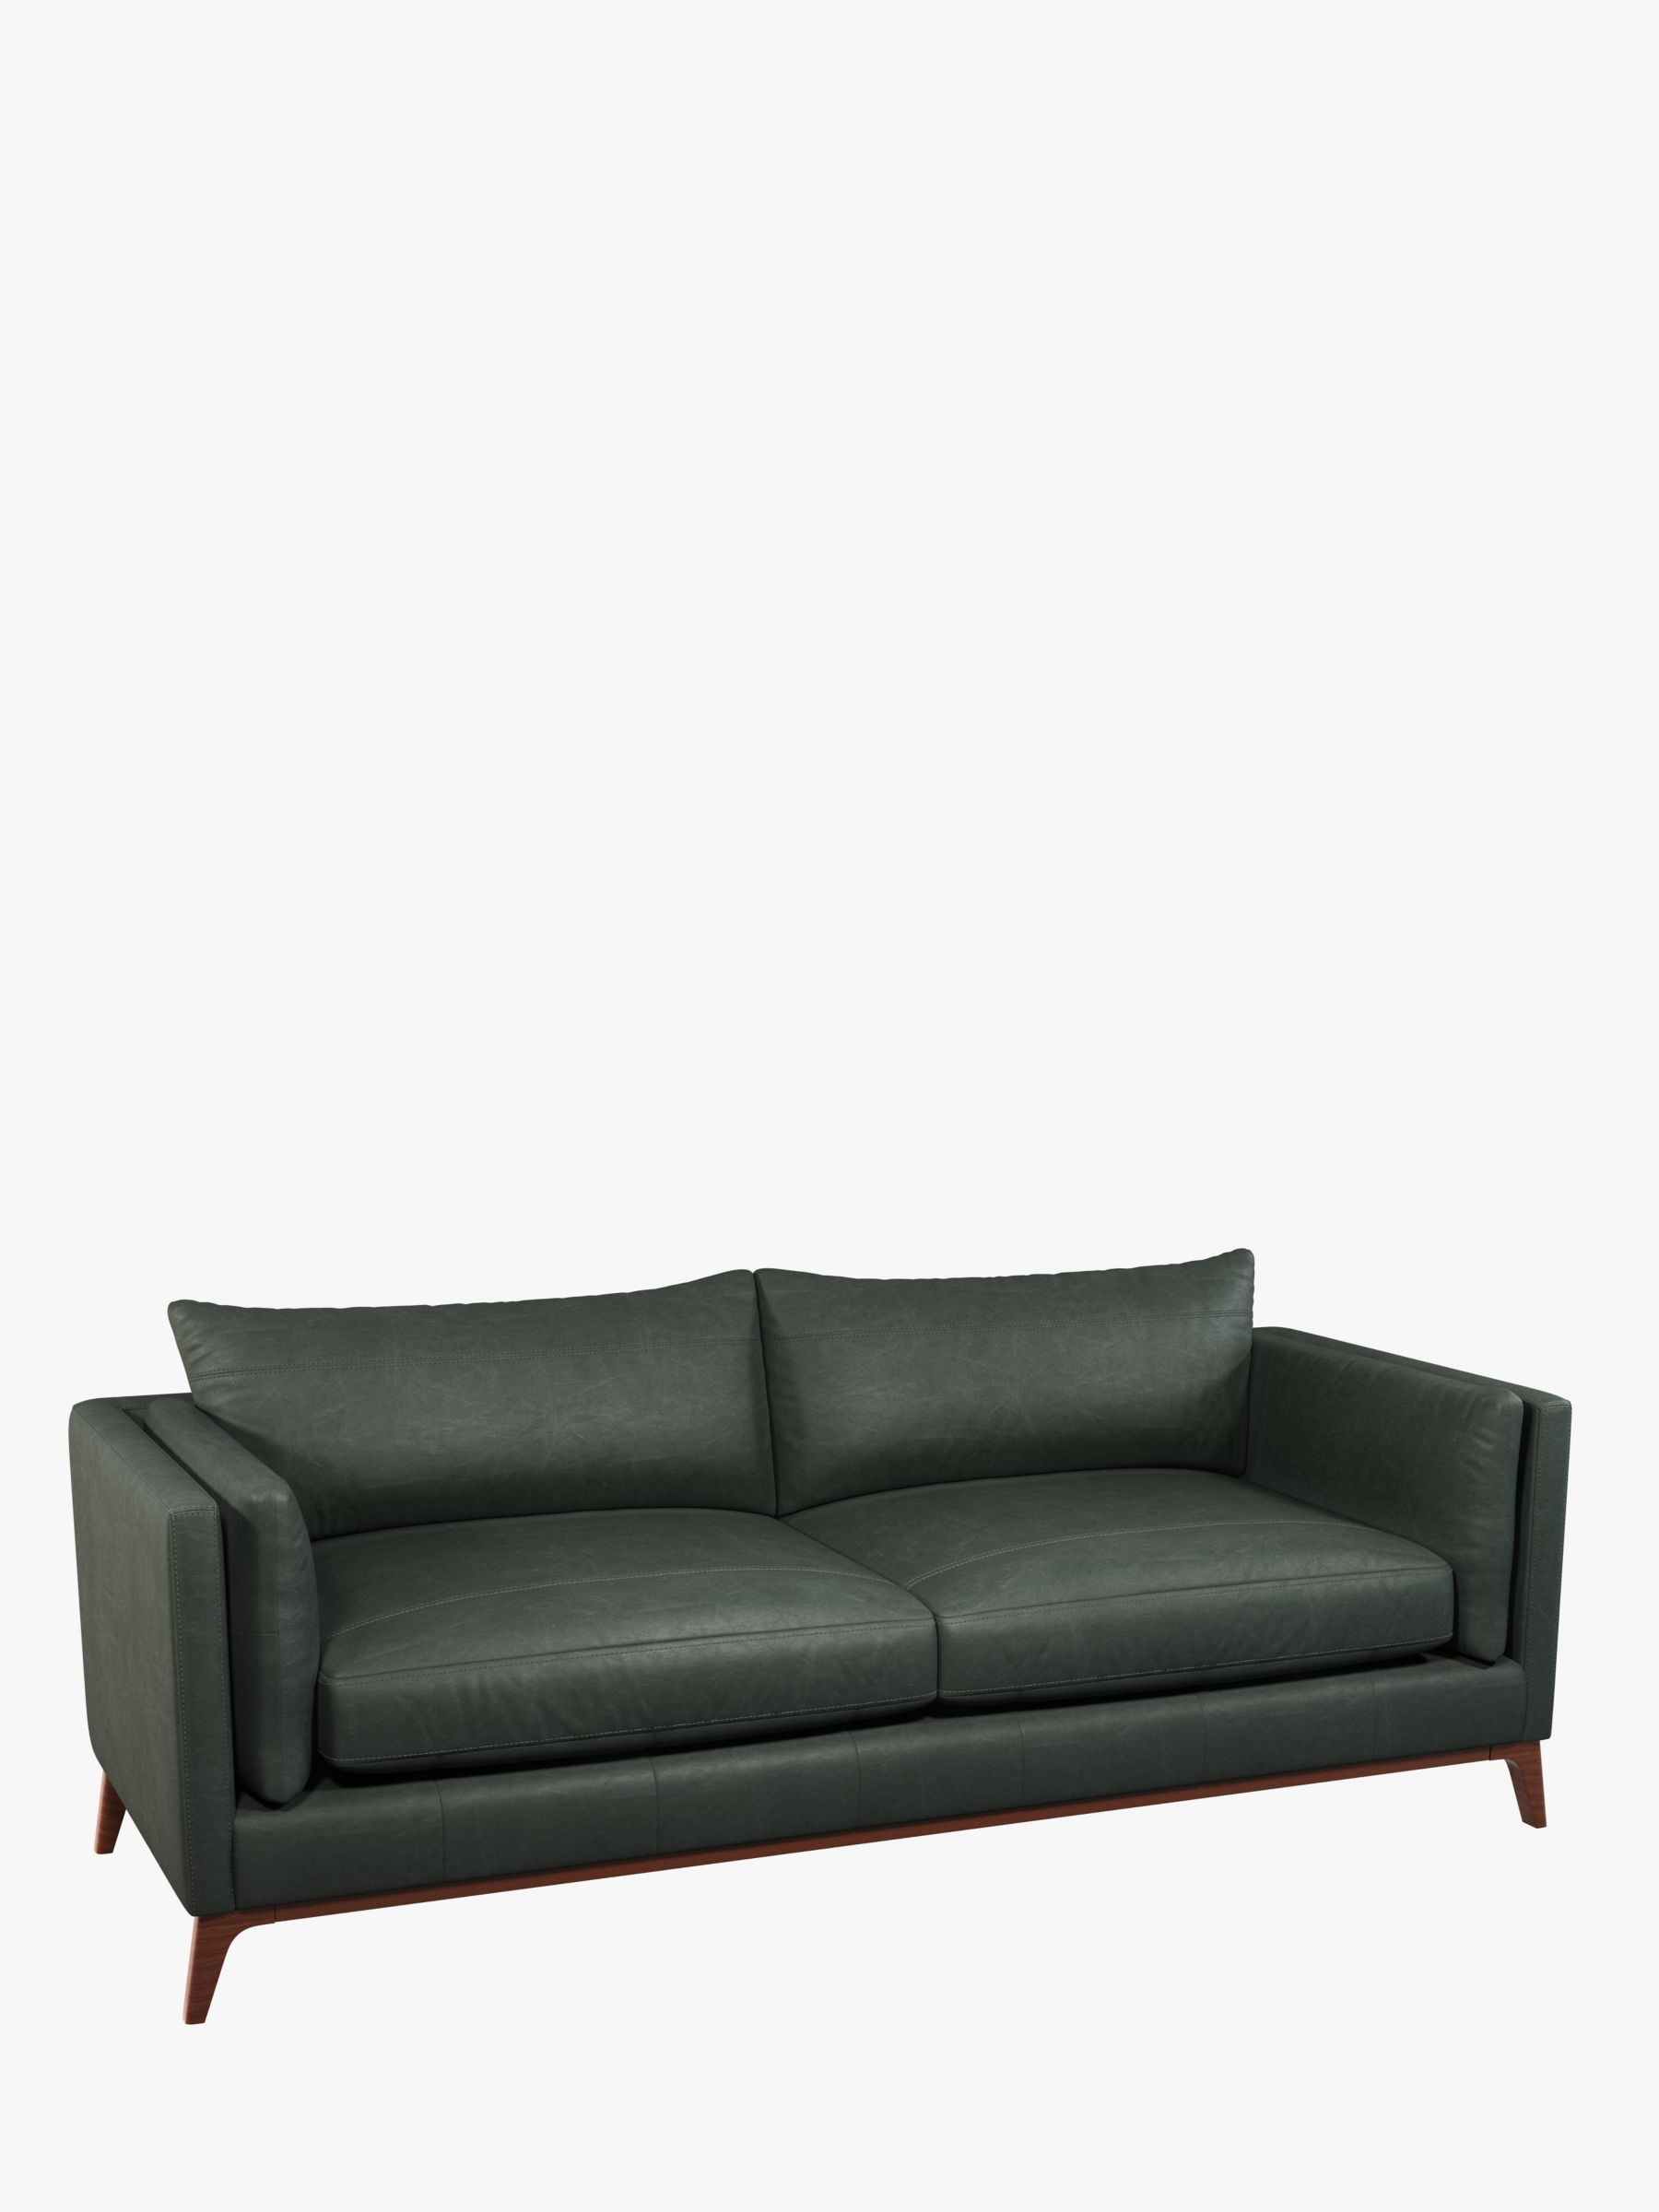 John Lewis Trim Grand 4 Seater Leather Sofa, Dark Leg